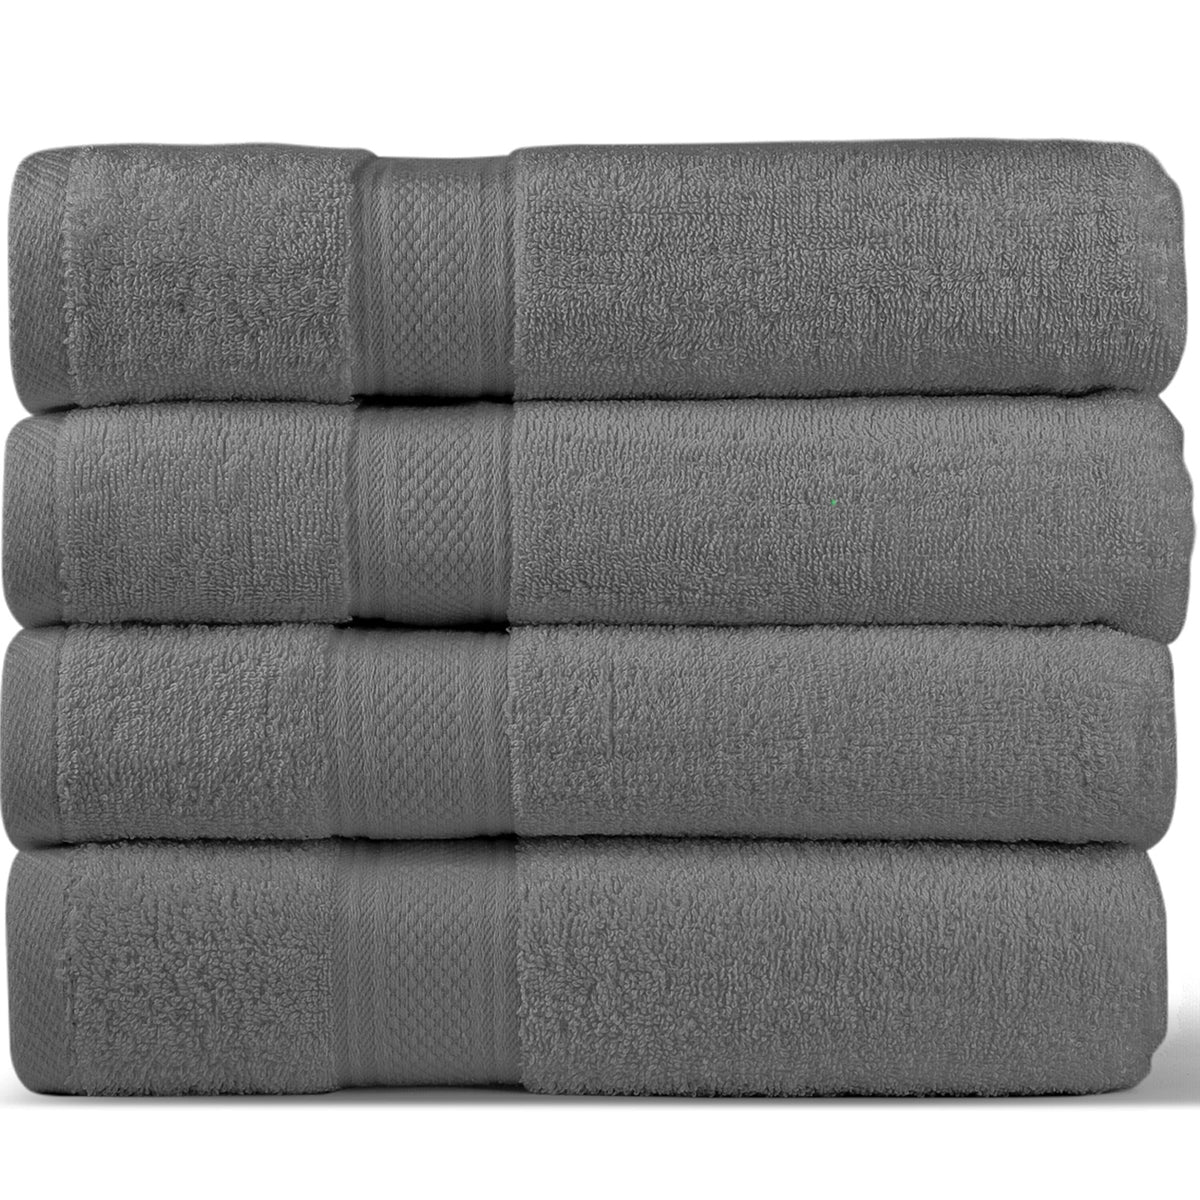 Gray Towel Set (Pack of 4)